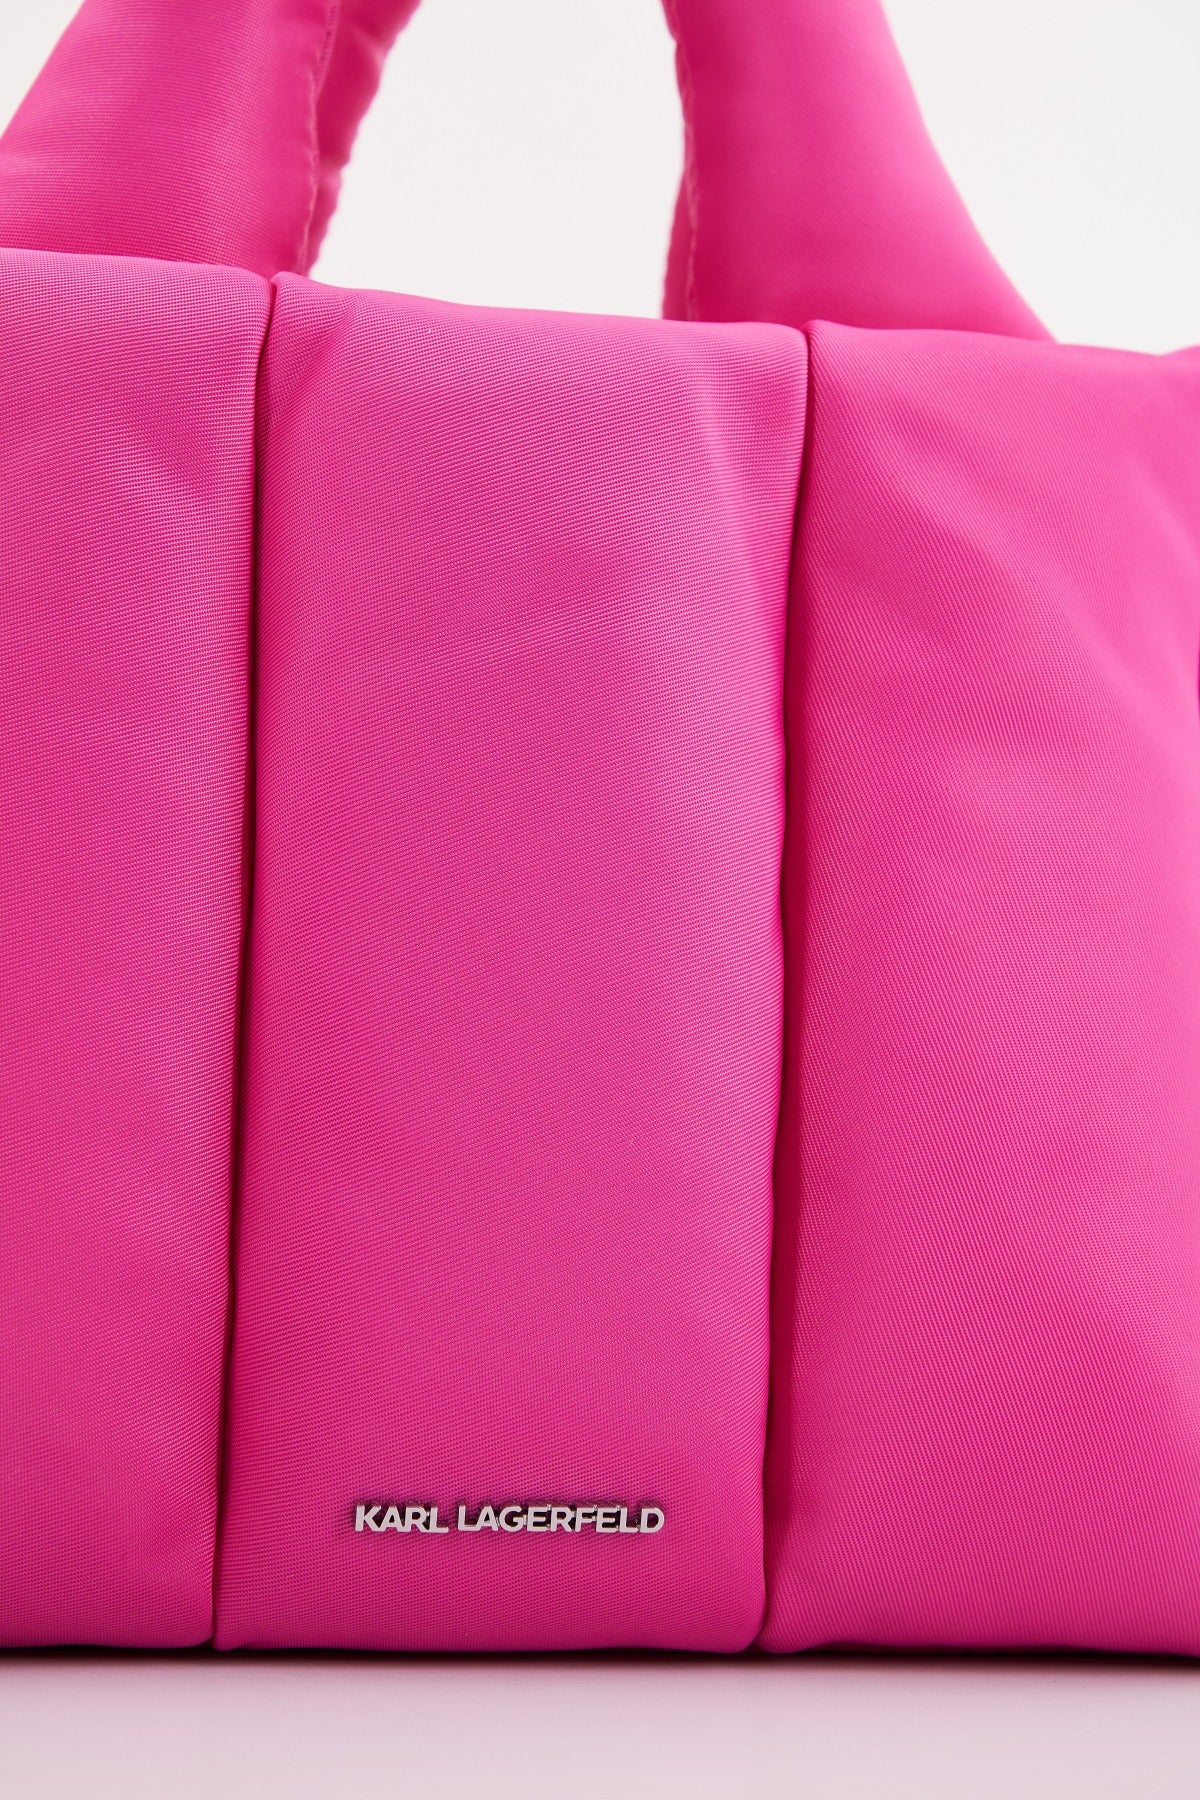 KARL LAGERFELD K/IKONIK . NYLON PUFF S en color ROSA  (4)